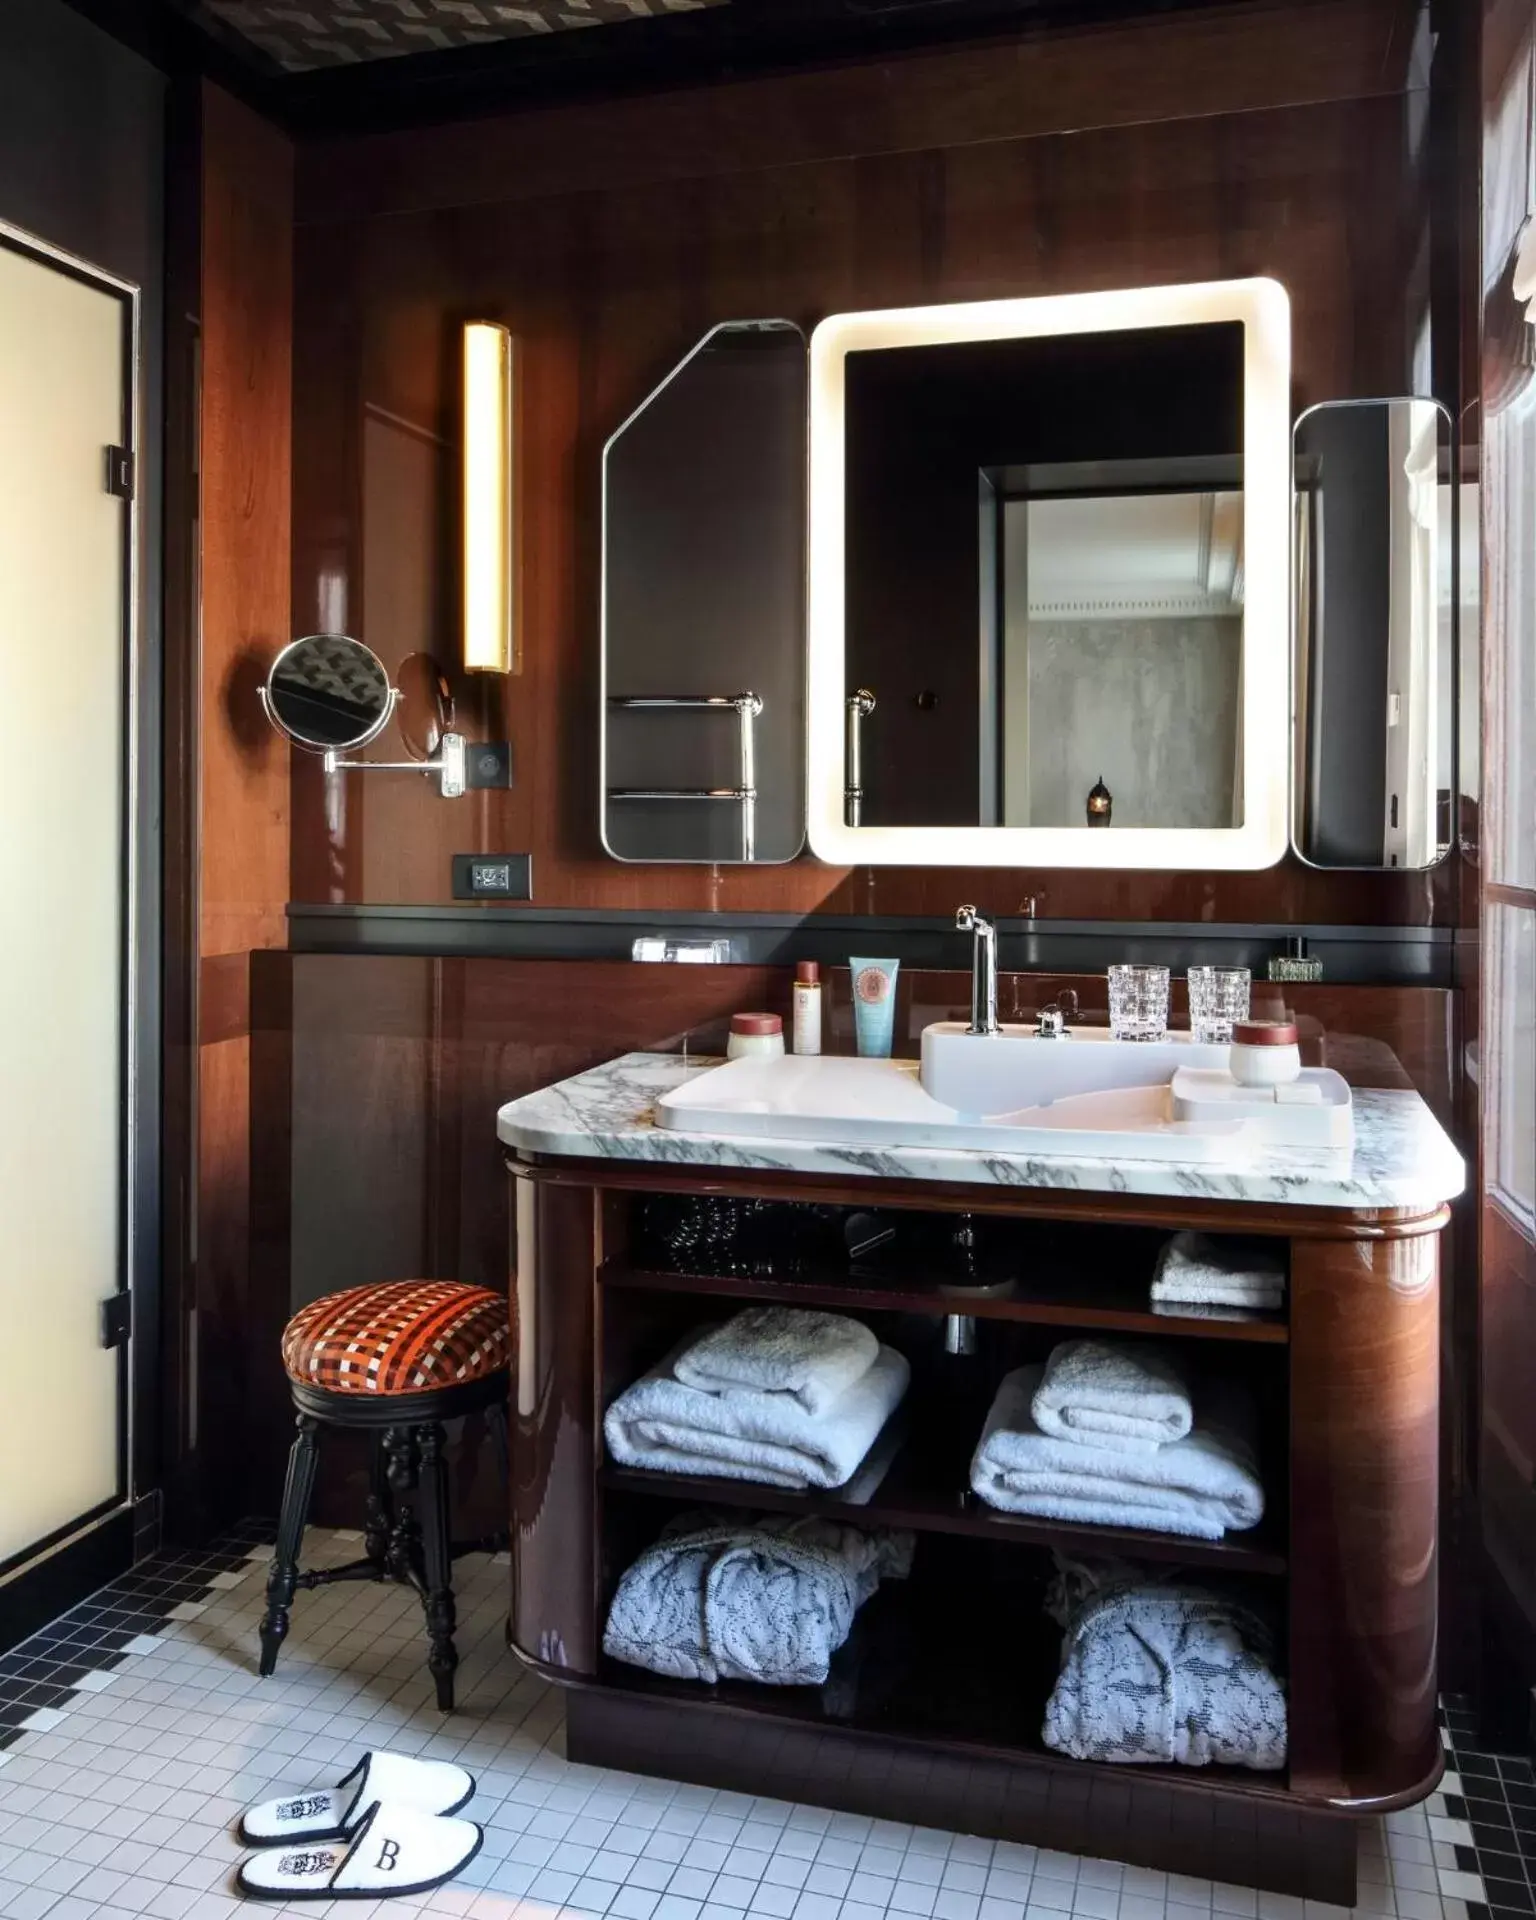 Bathroom in Hotel Les Bains Paris